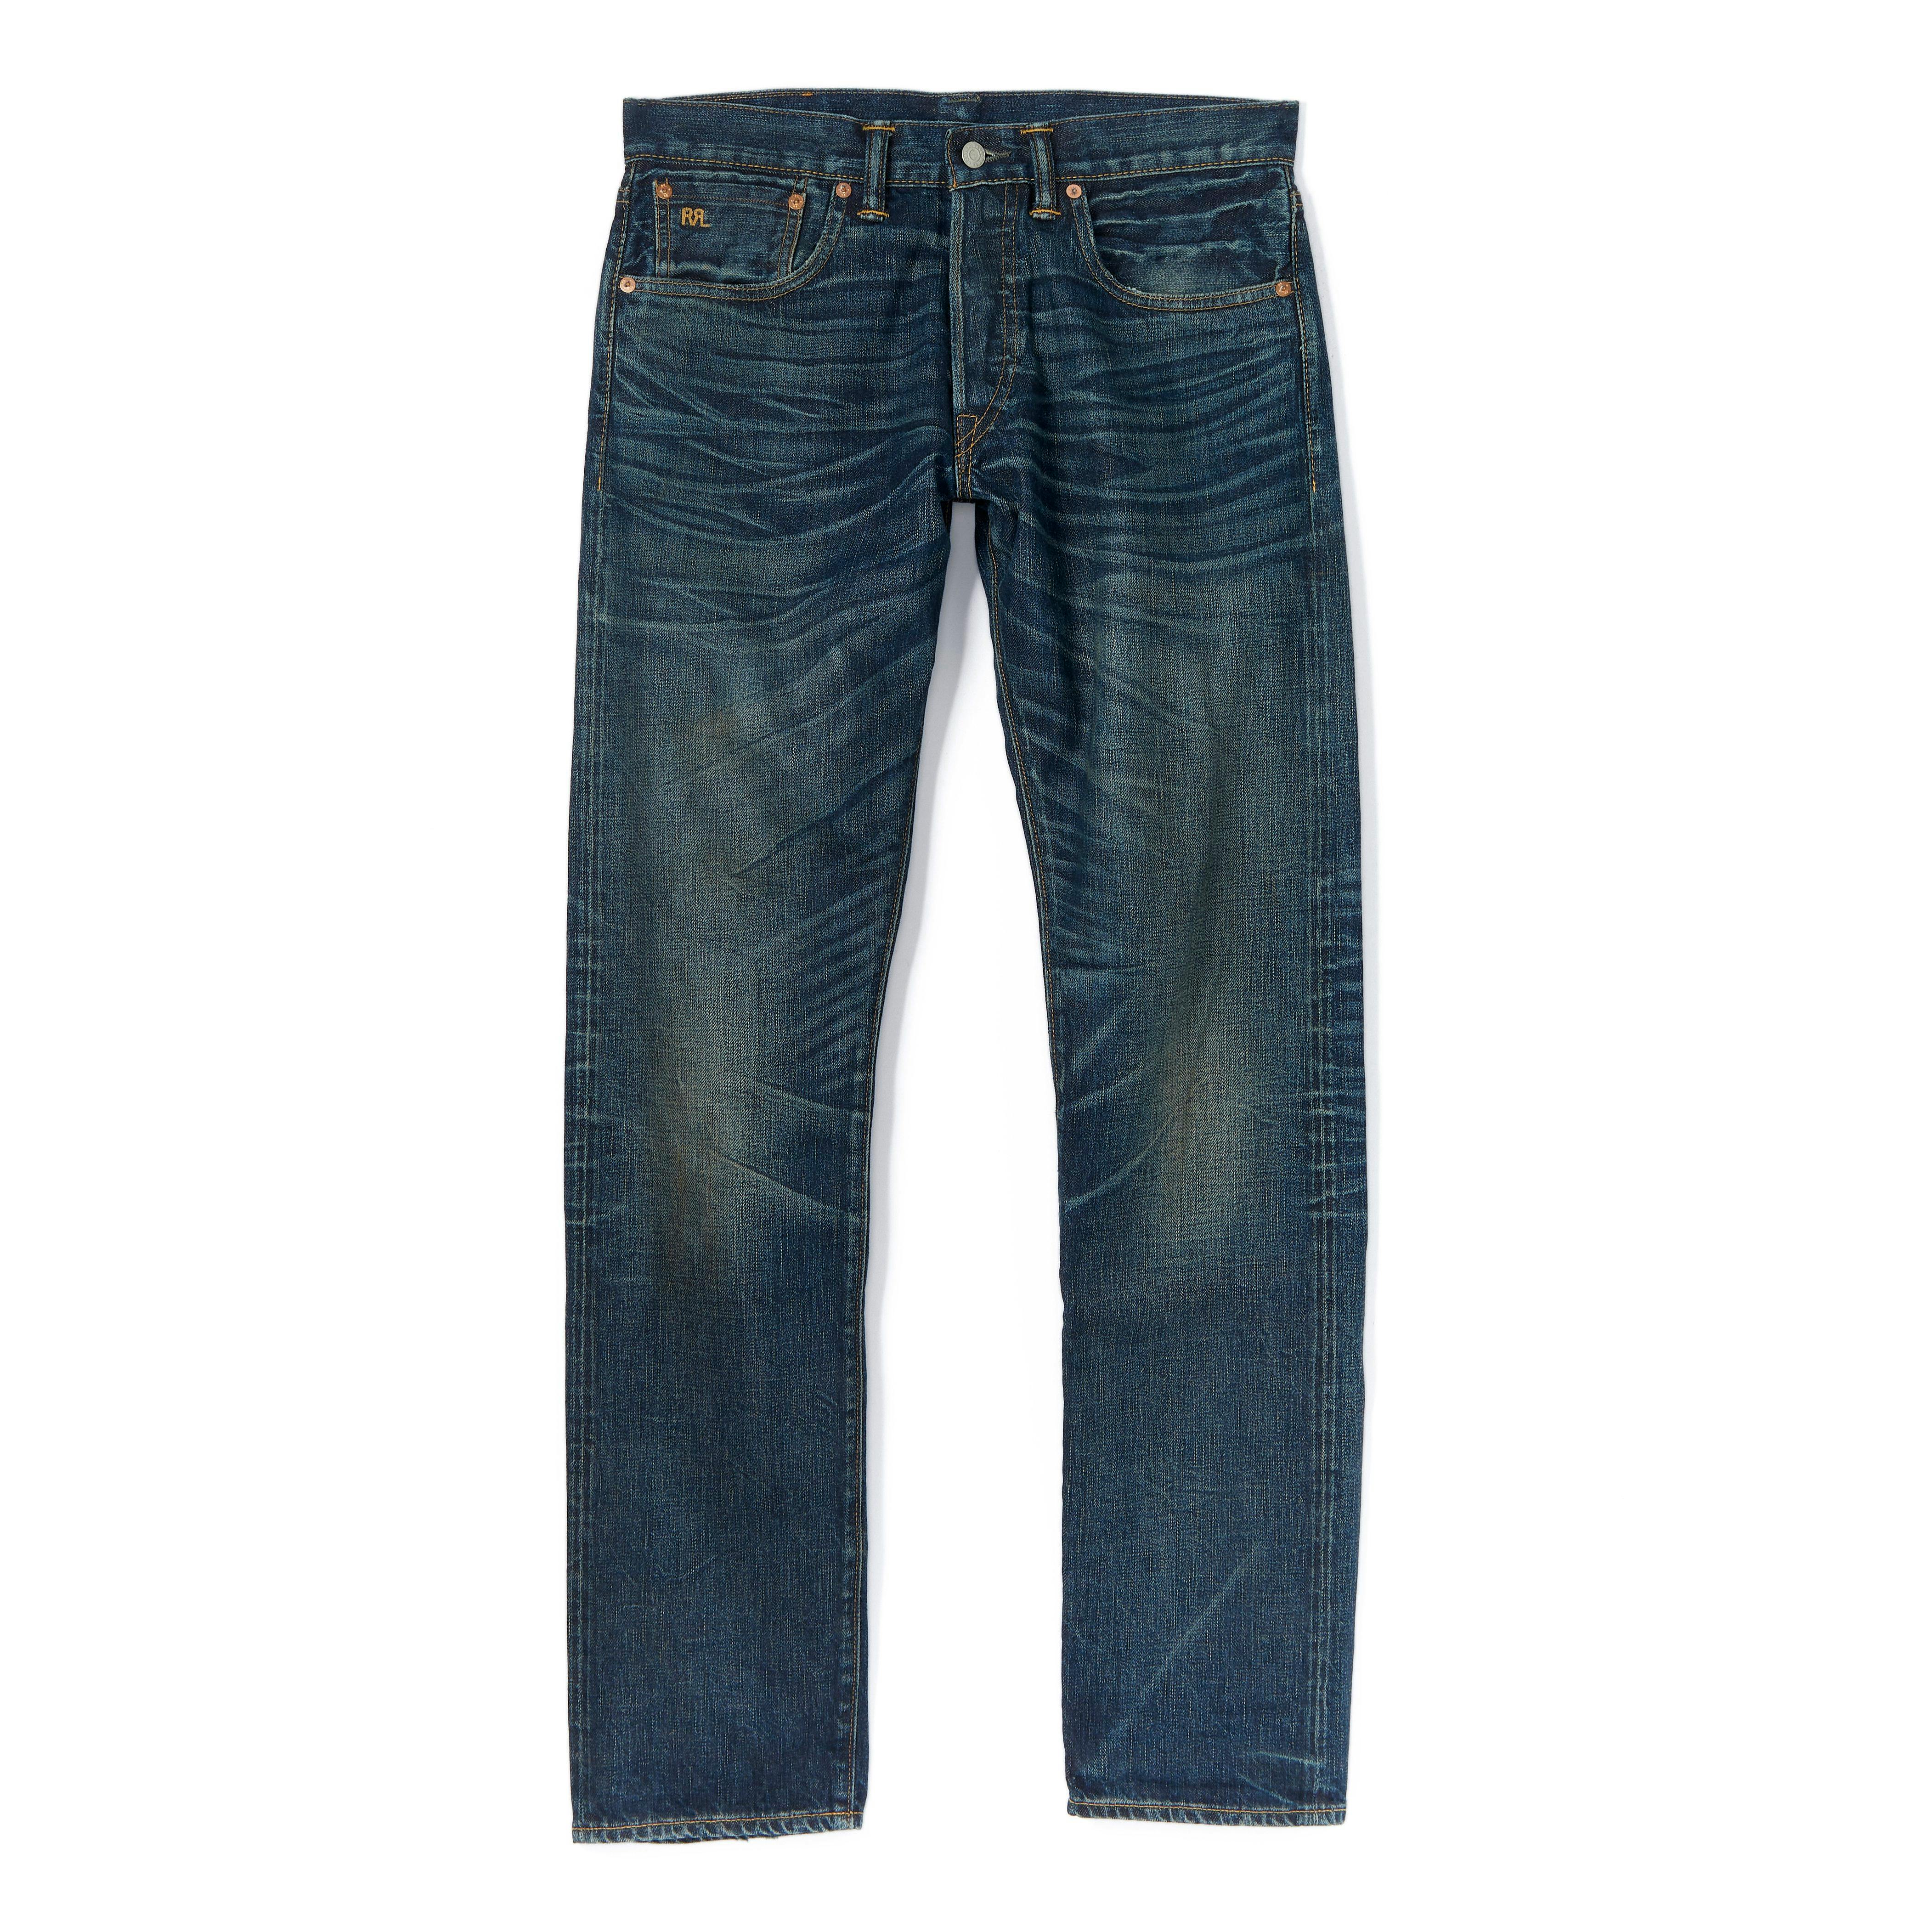 90s Ralph Lauren Light Wash Jeans - 29 x 30